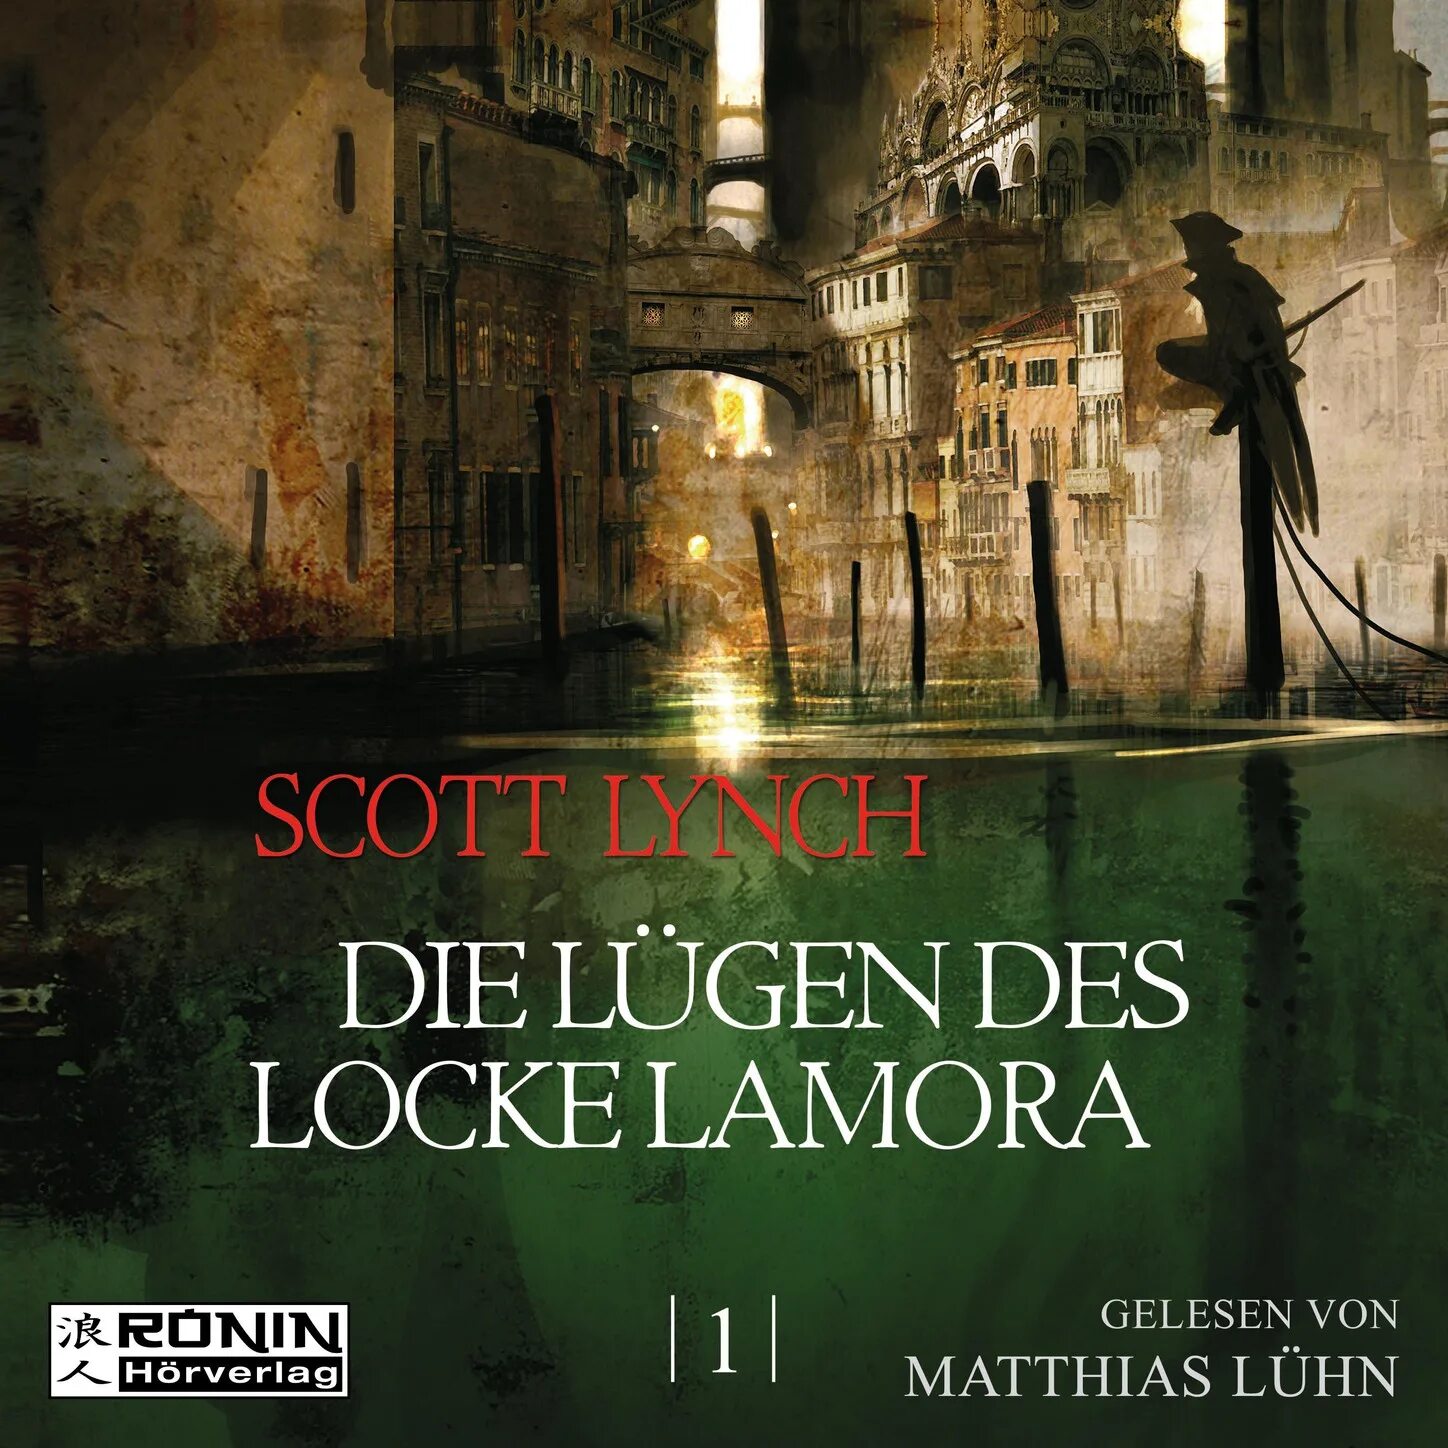 Скотт линч книги. The Lies of Locke Lamora. Хитрости Локка Ламоры Скотт Линч книга. Lamora Soft.